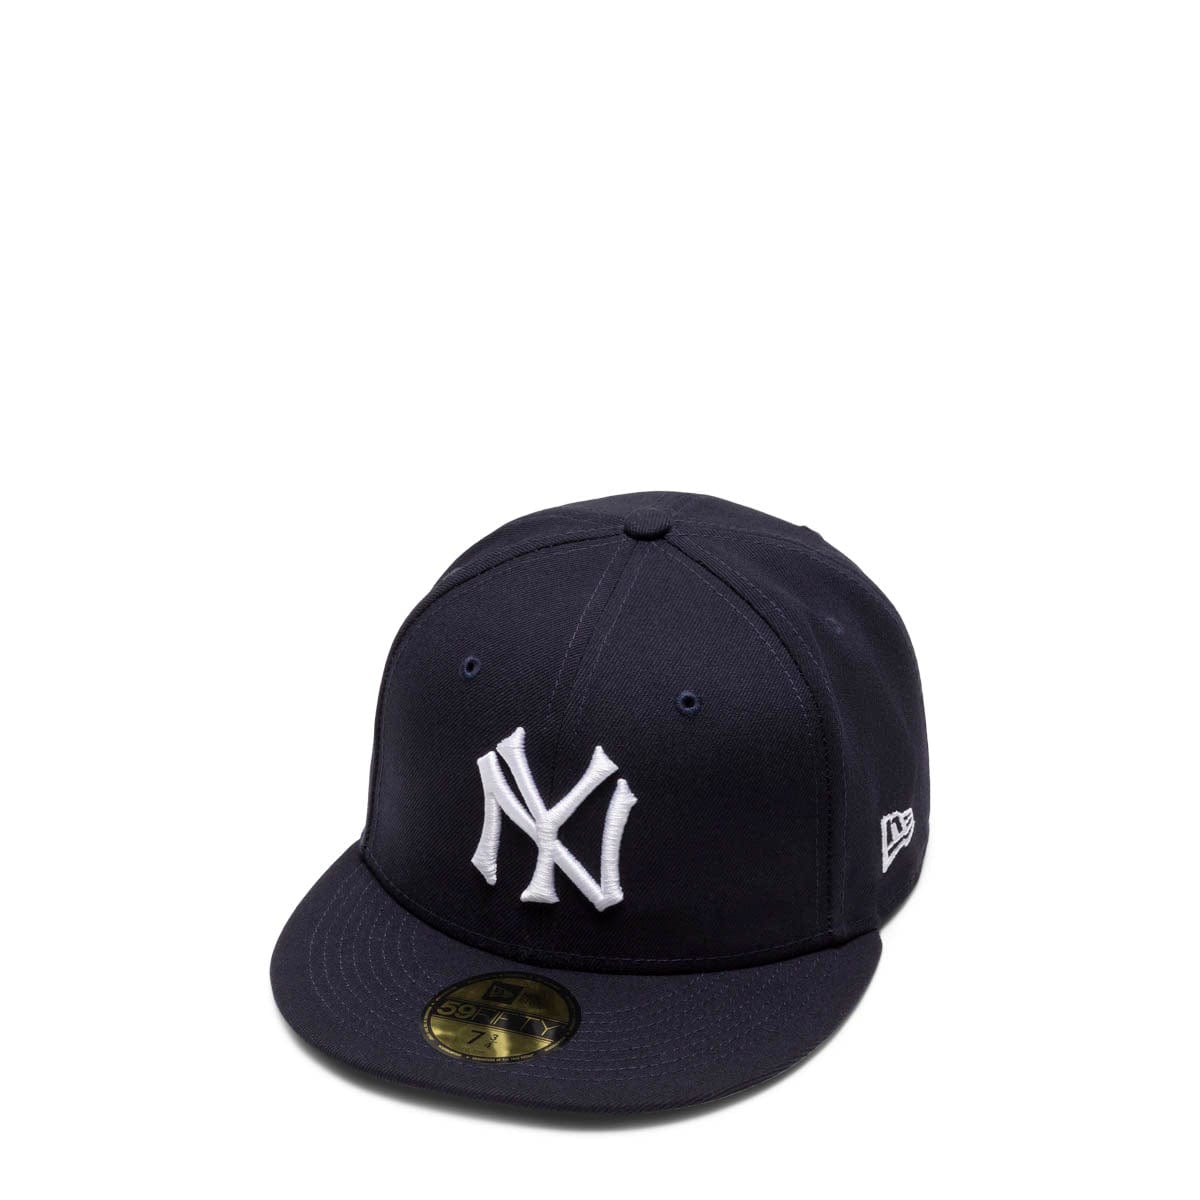 New Era Cap Black New York Yankees cap 